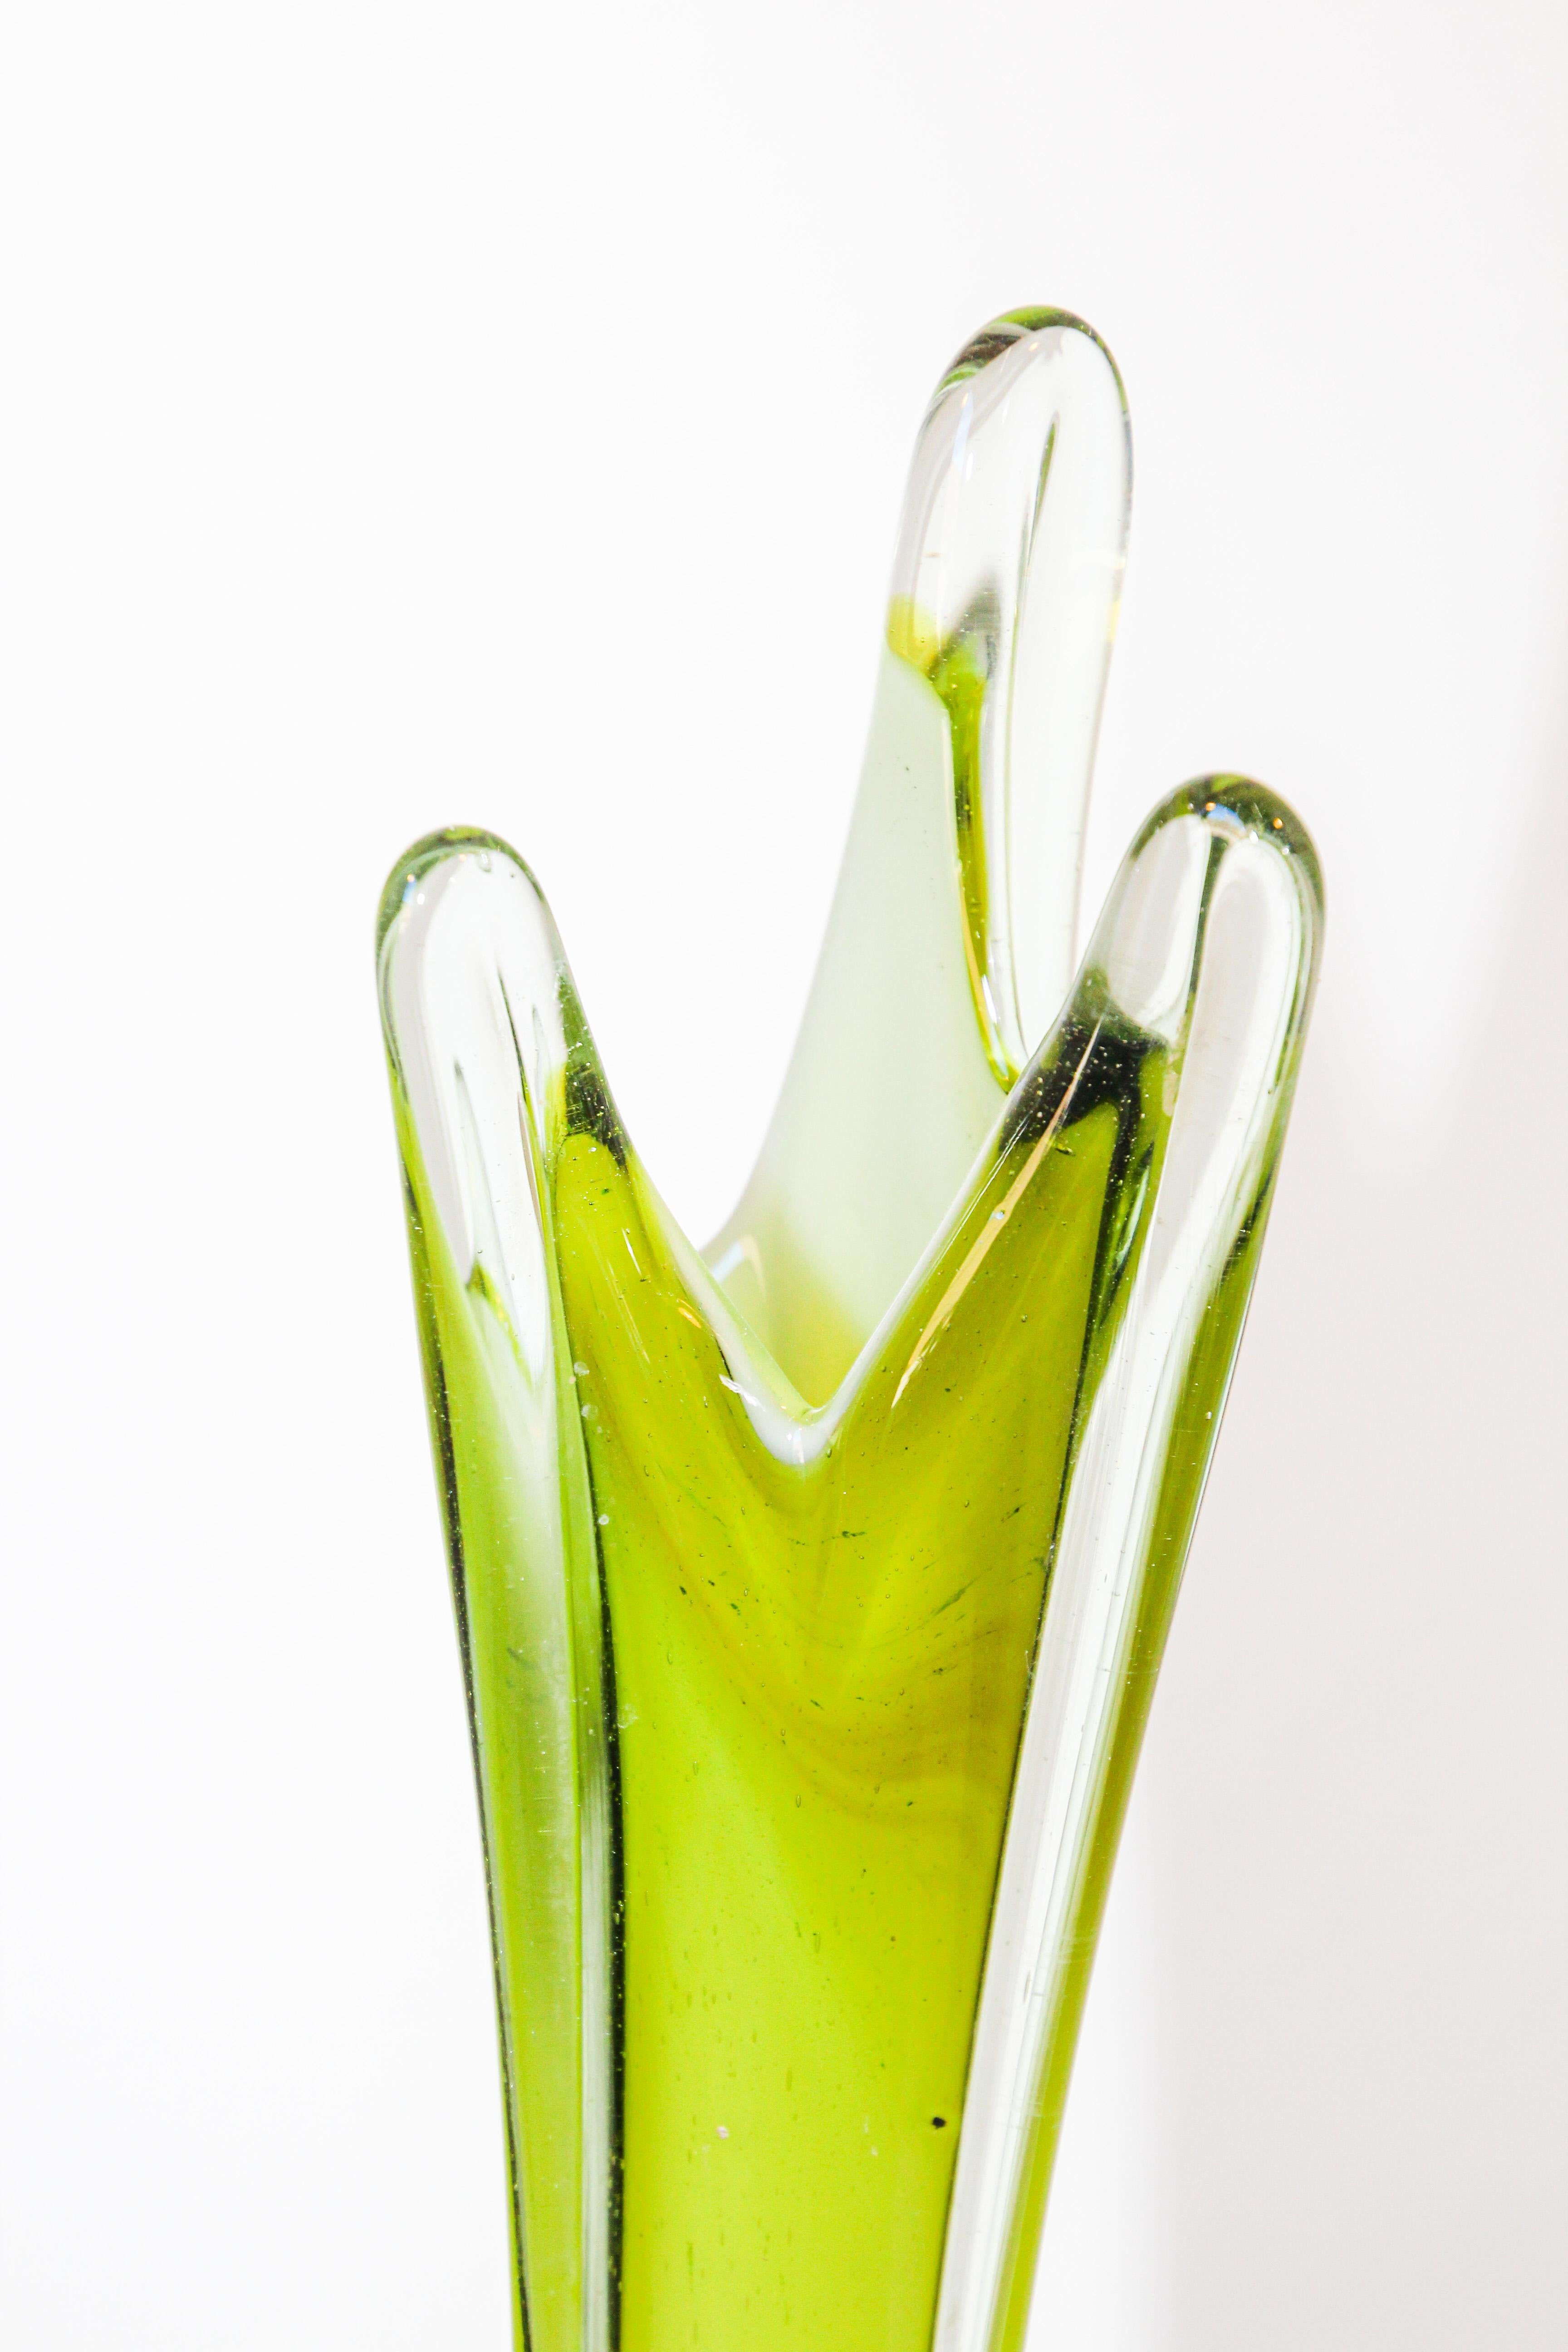 Hand-Crafted Italian Murano Handblown Art Glass Vase Sculpture Long Neck For Sale